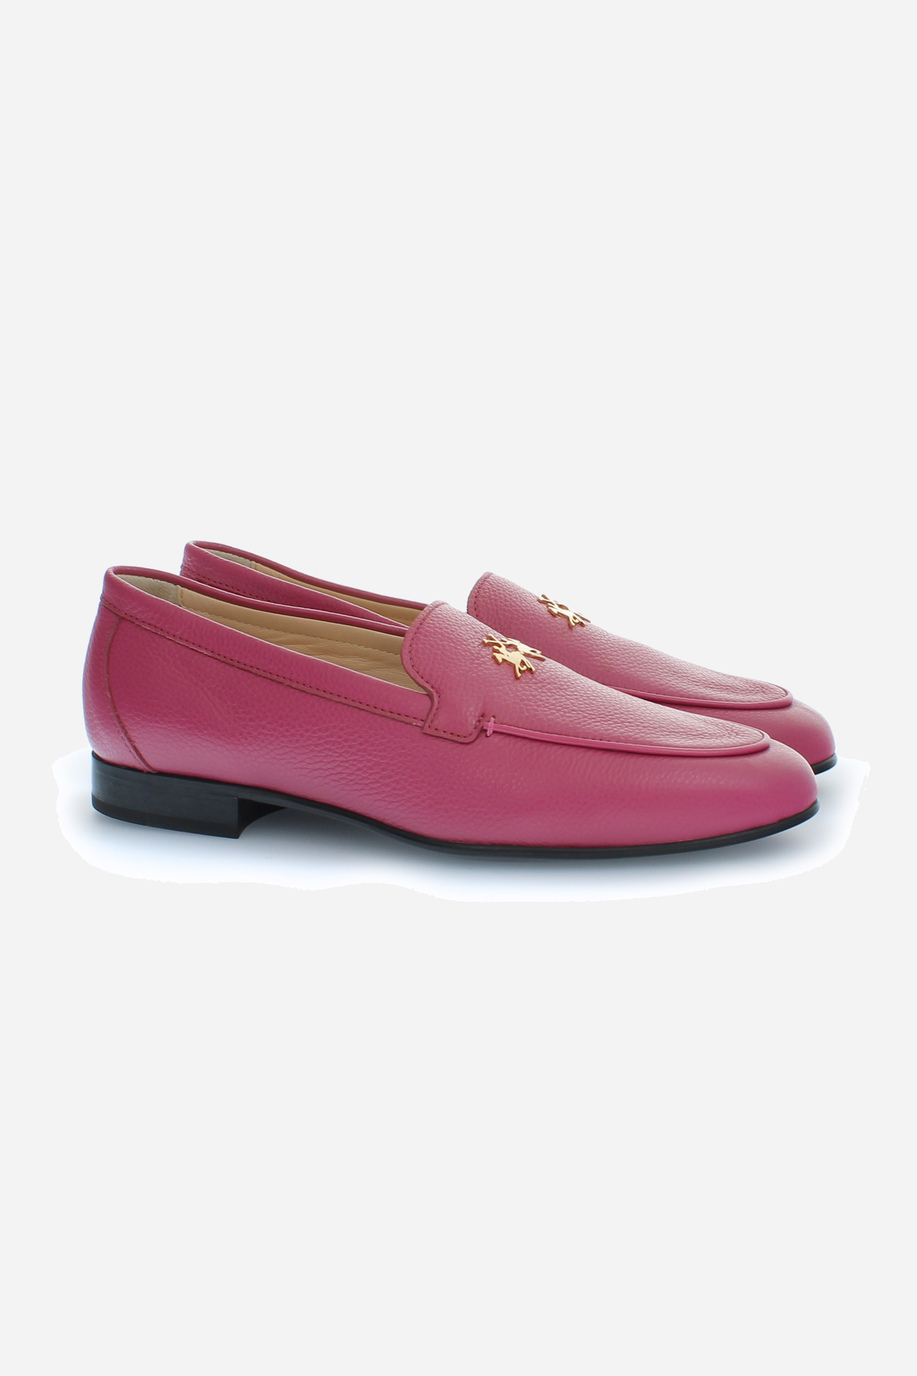 Women's leather loafers - Footwear | La Martina - Official Online Shop